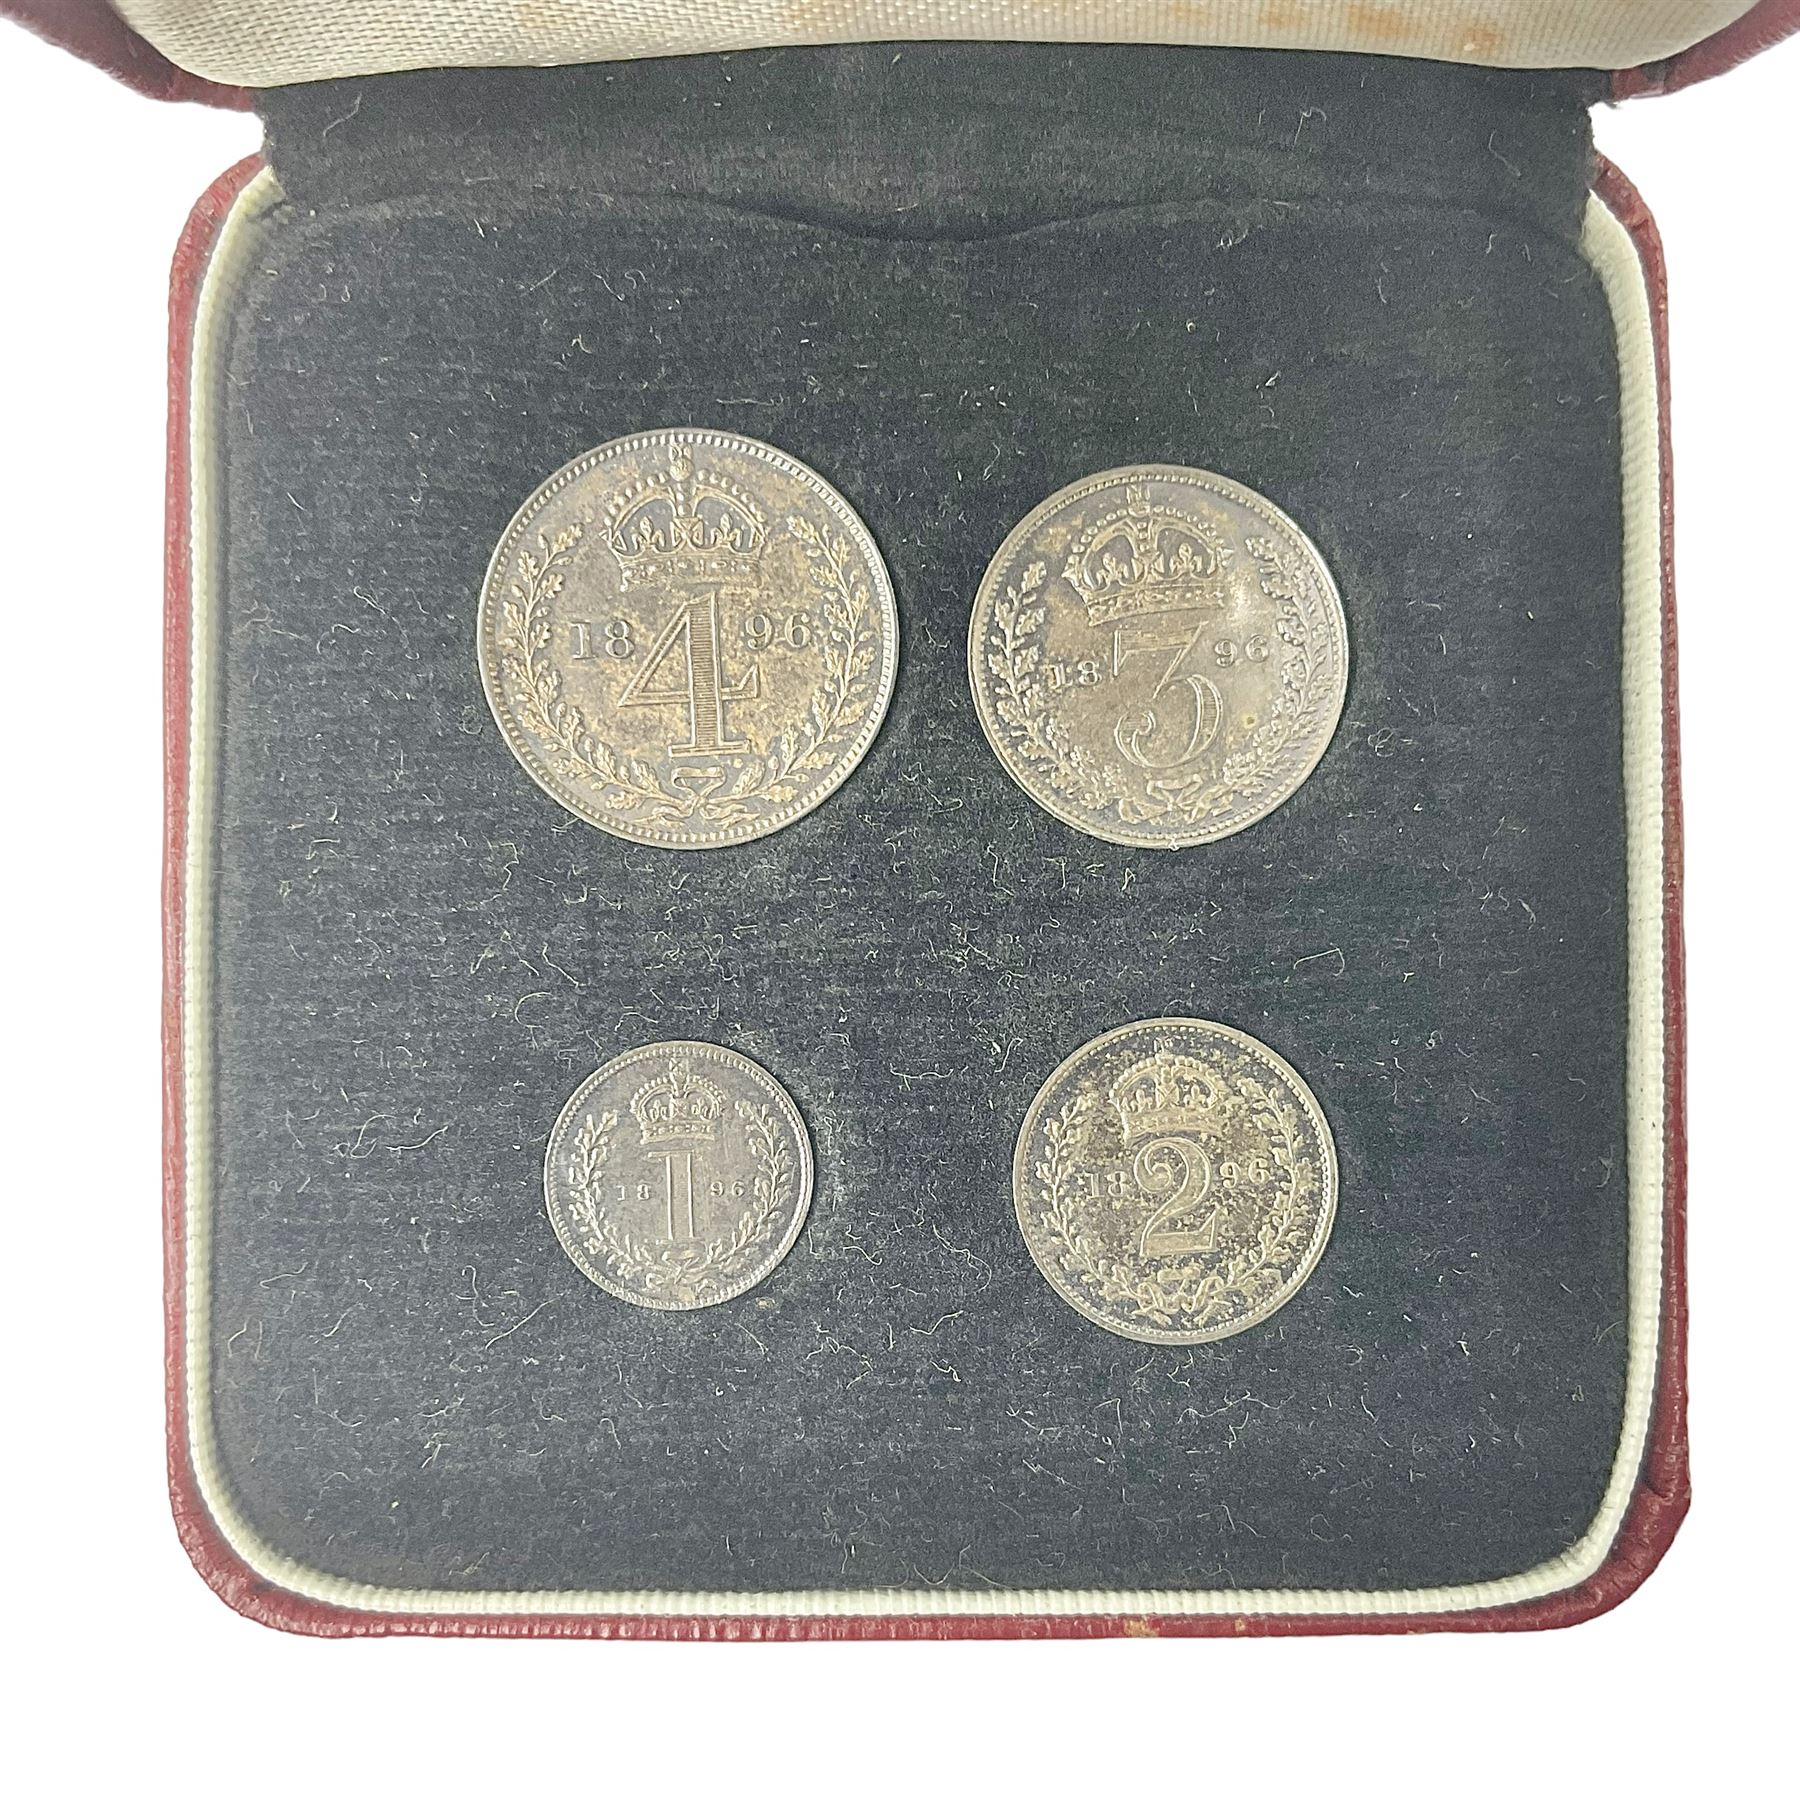 Queen Victoria 1896 maundy coin set